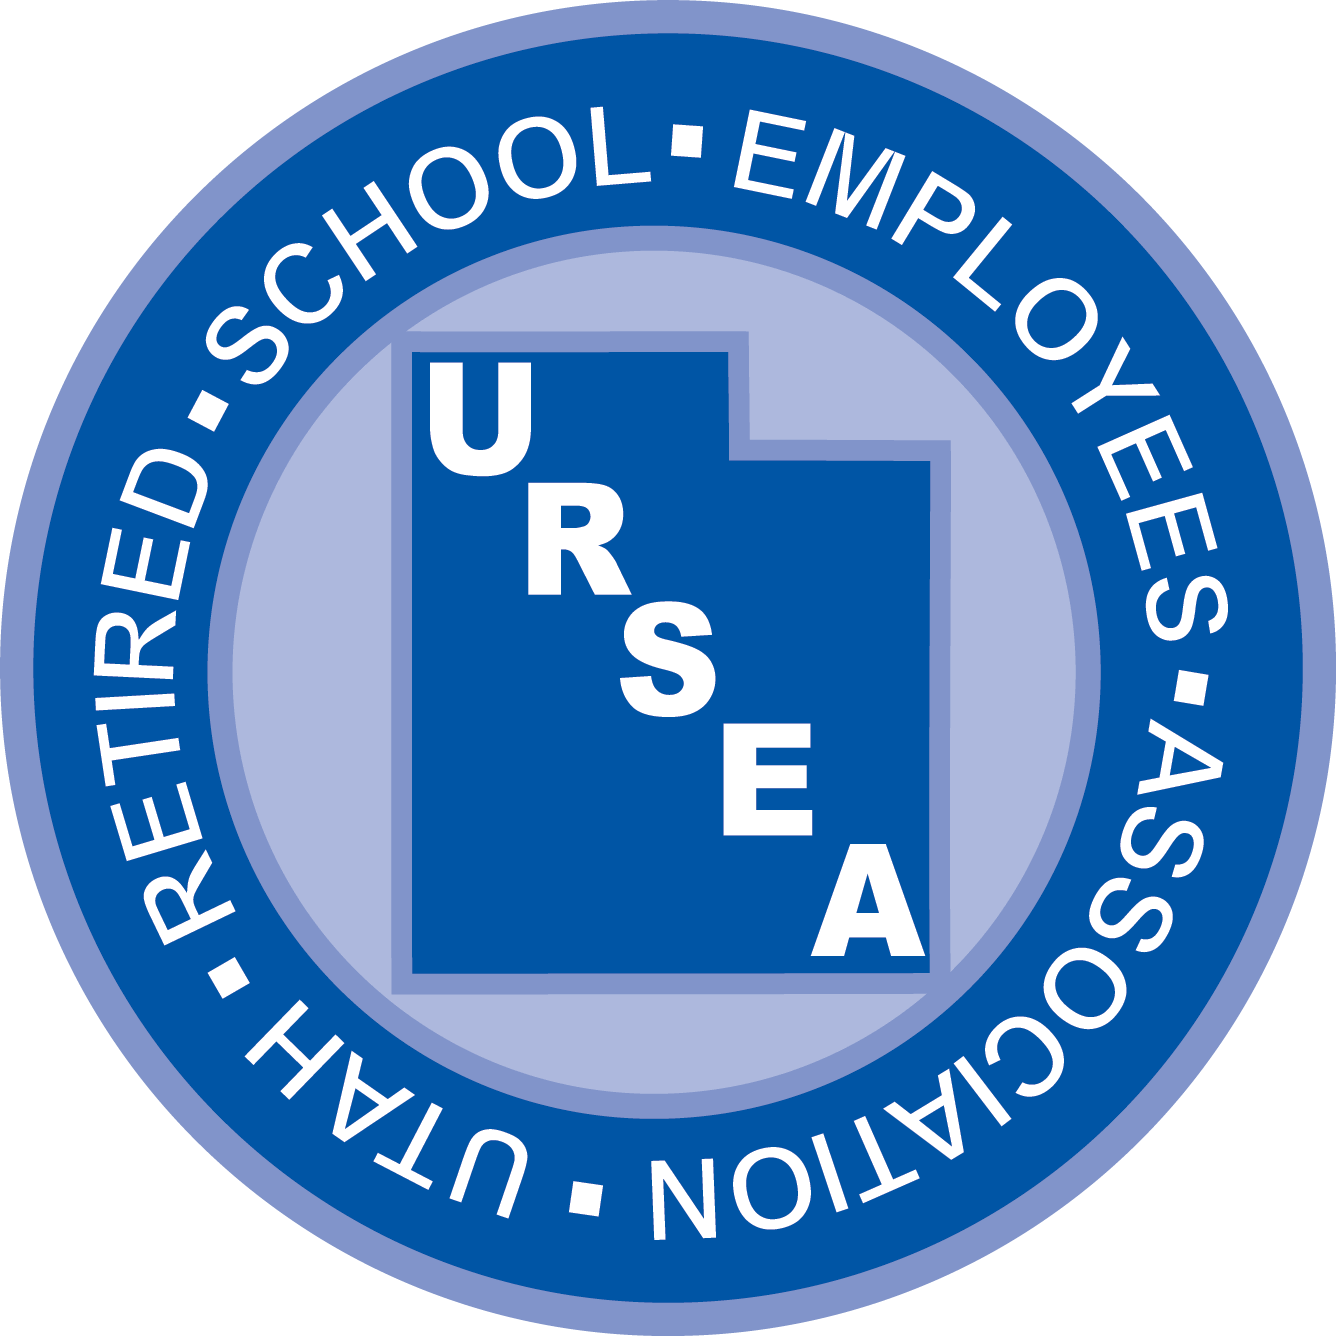 Utah Retired School Employees Association